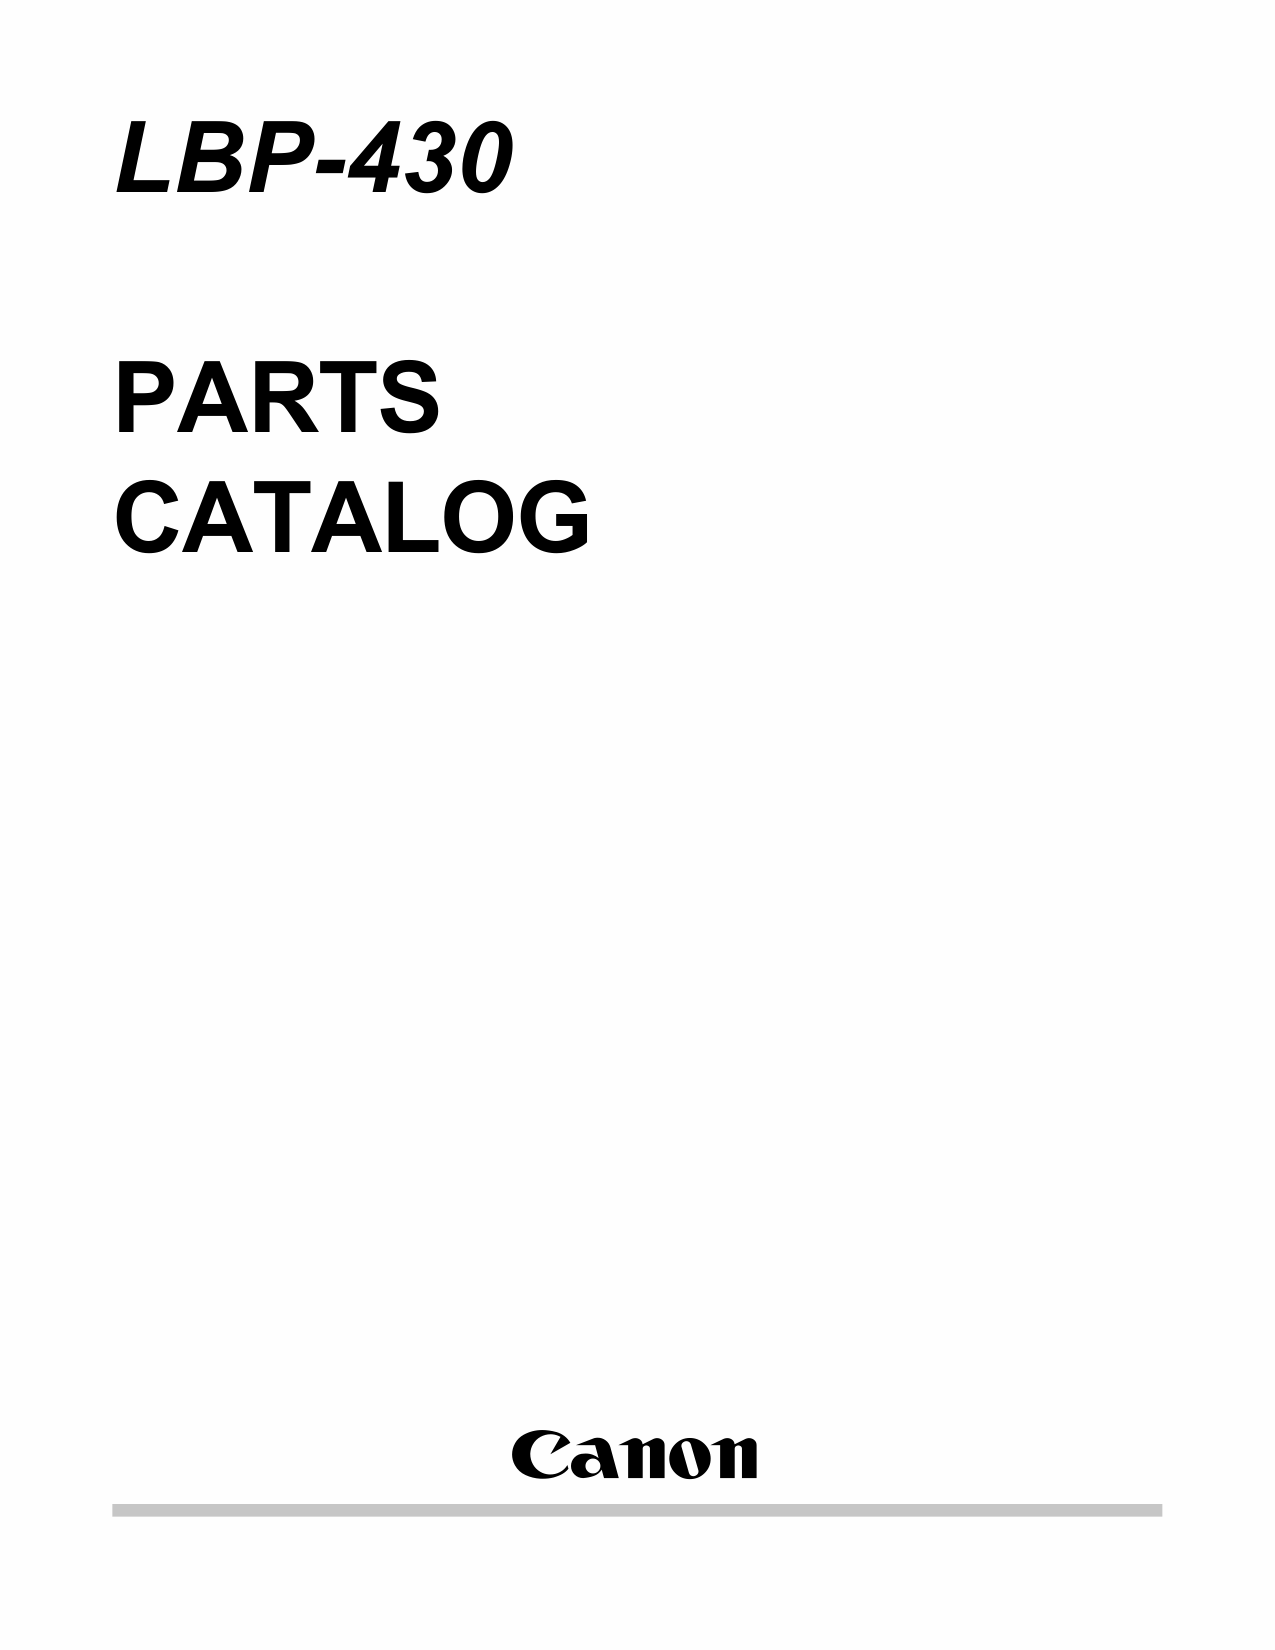 Canon imageCLASS LBP-430 Parts Catalog Manual-1